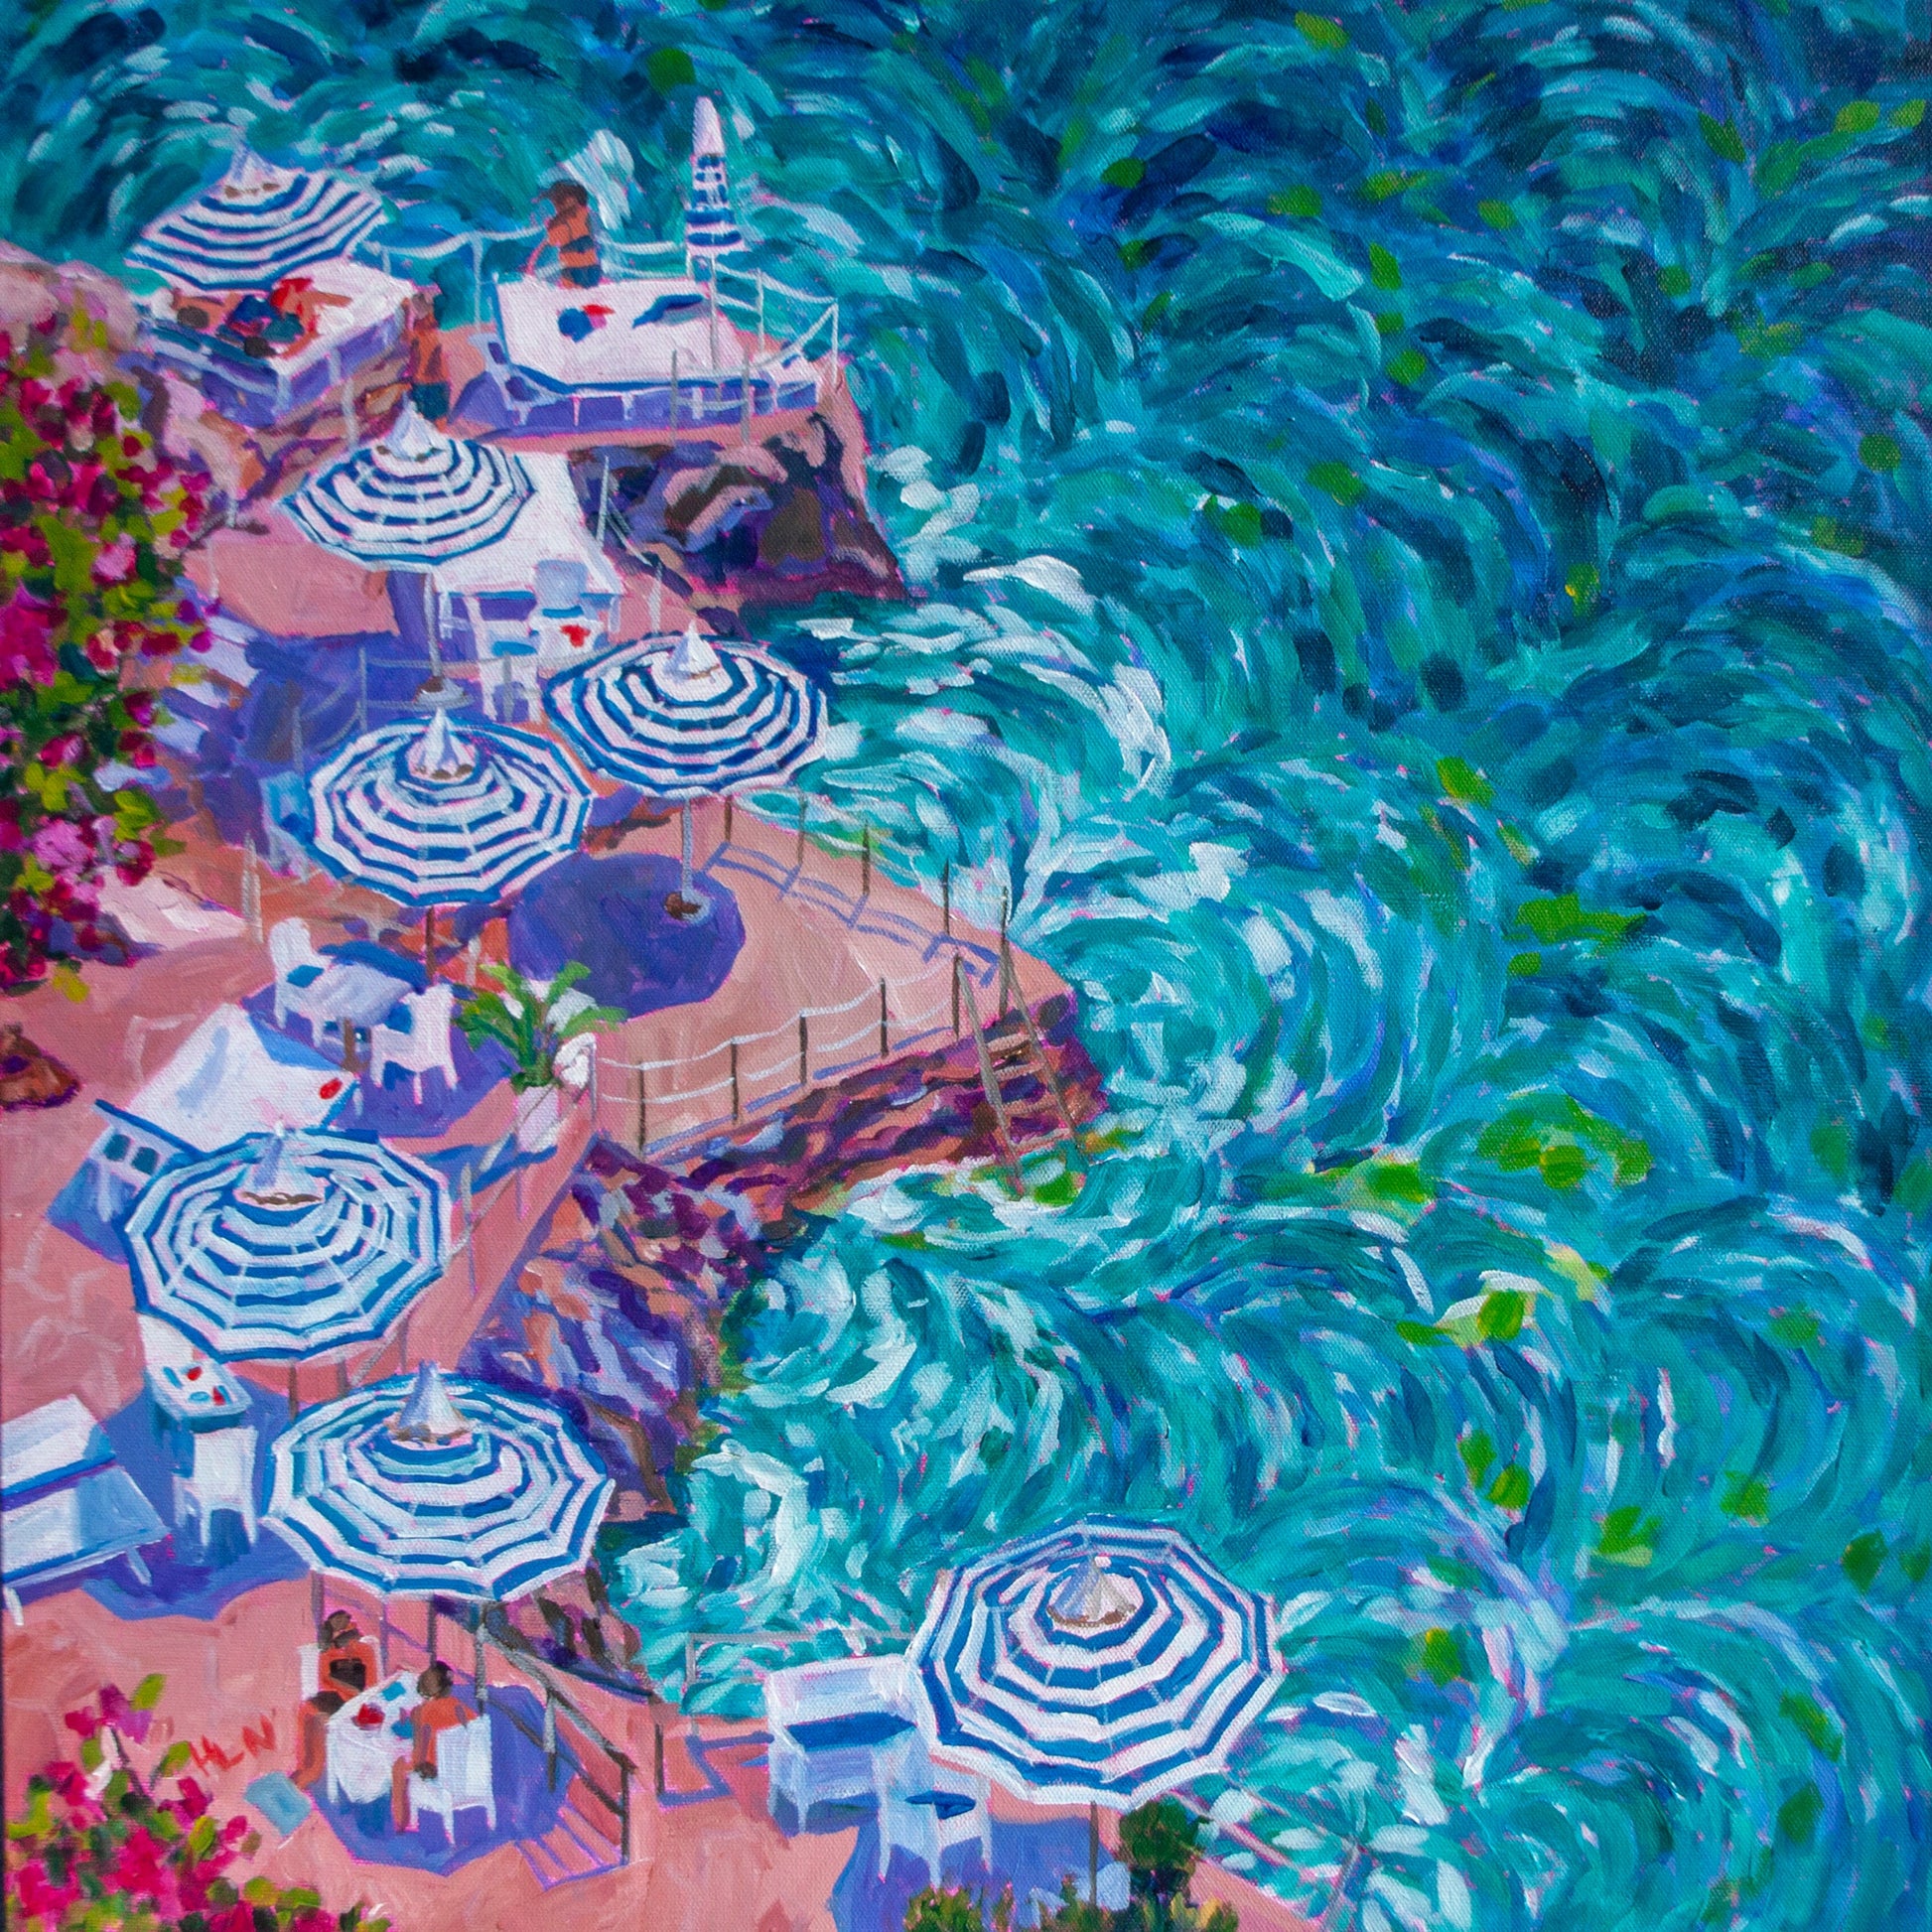 Original vibrant  impressionistic painting overhead scene of white and blue umbrellas next to the sea in Positano, Italy